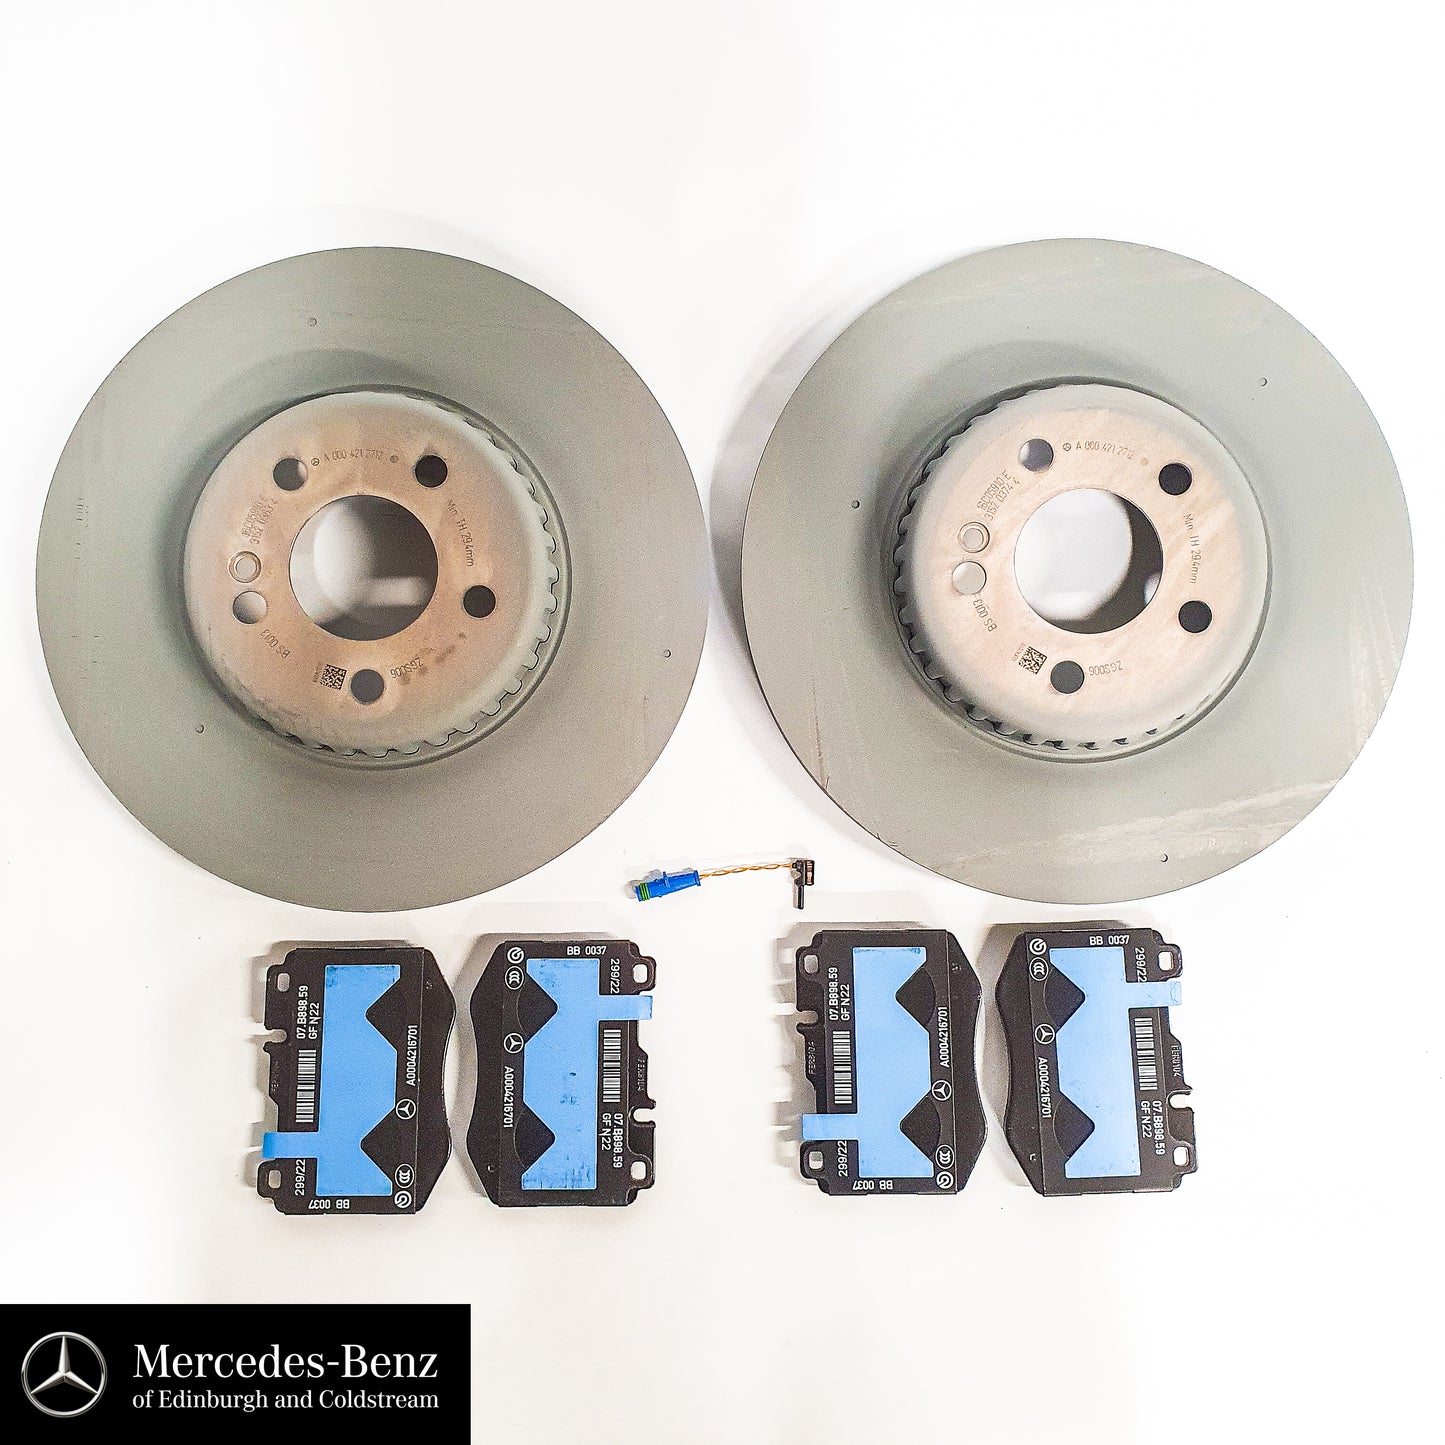 Genuine Mercedes-Benz brake discs, pads & wear sensor FRONT E Class 213 model series